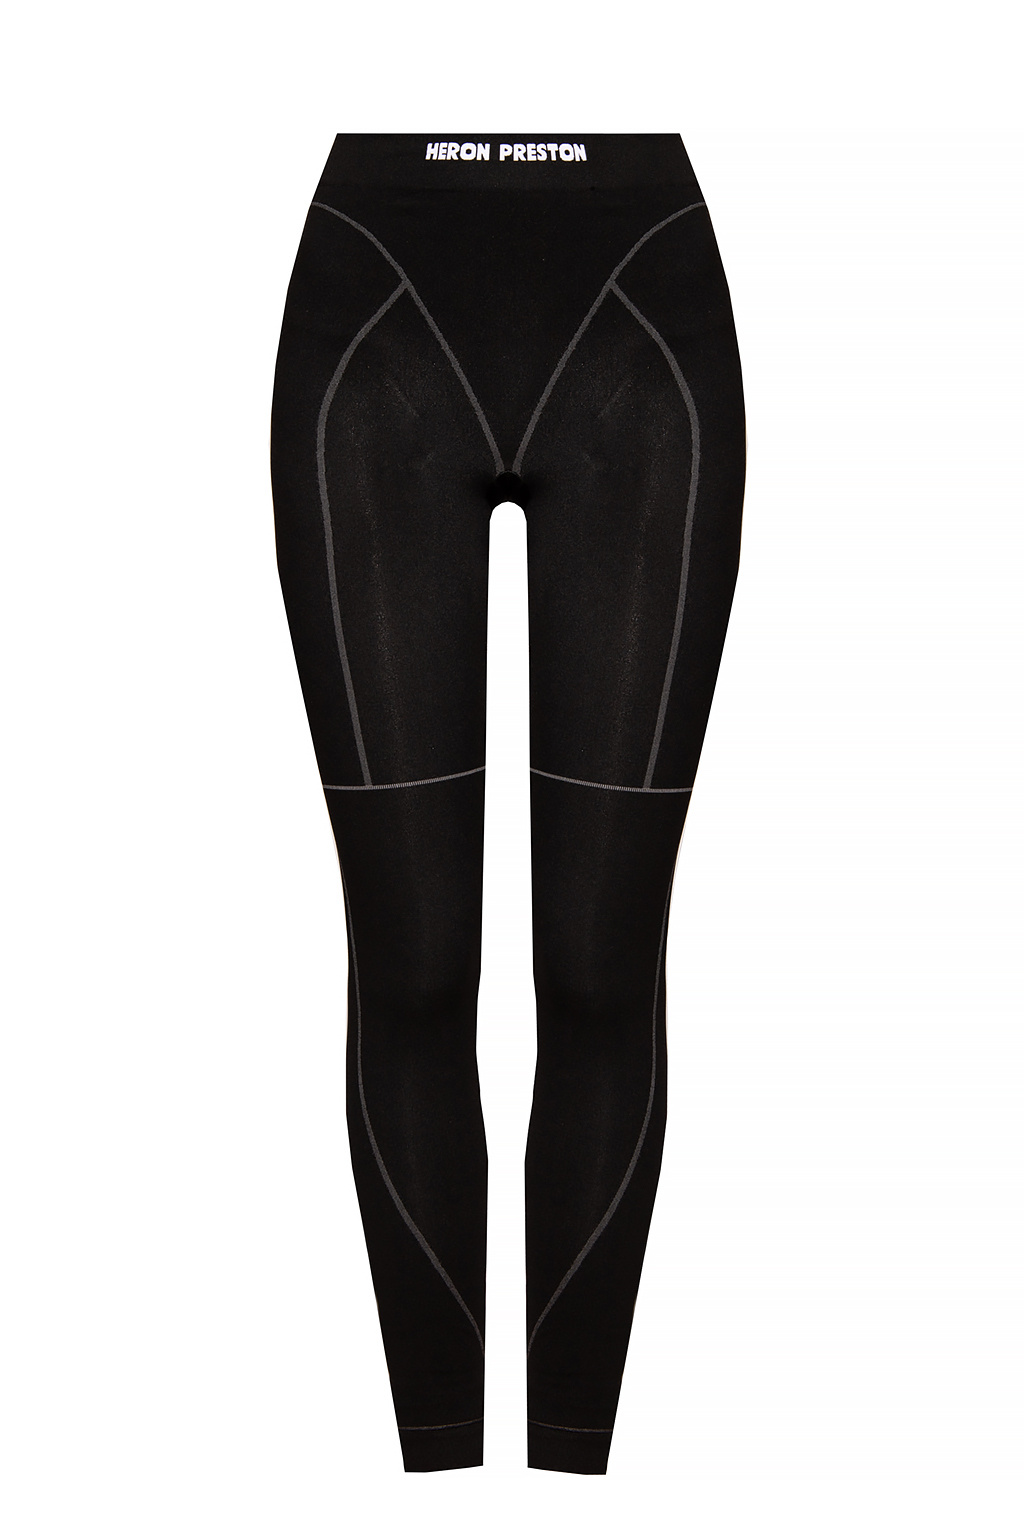 IetpShops Italy - High Neck Embellished Maxi Dress - Black Leggings with  logo Heron Preston